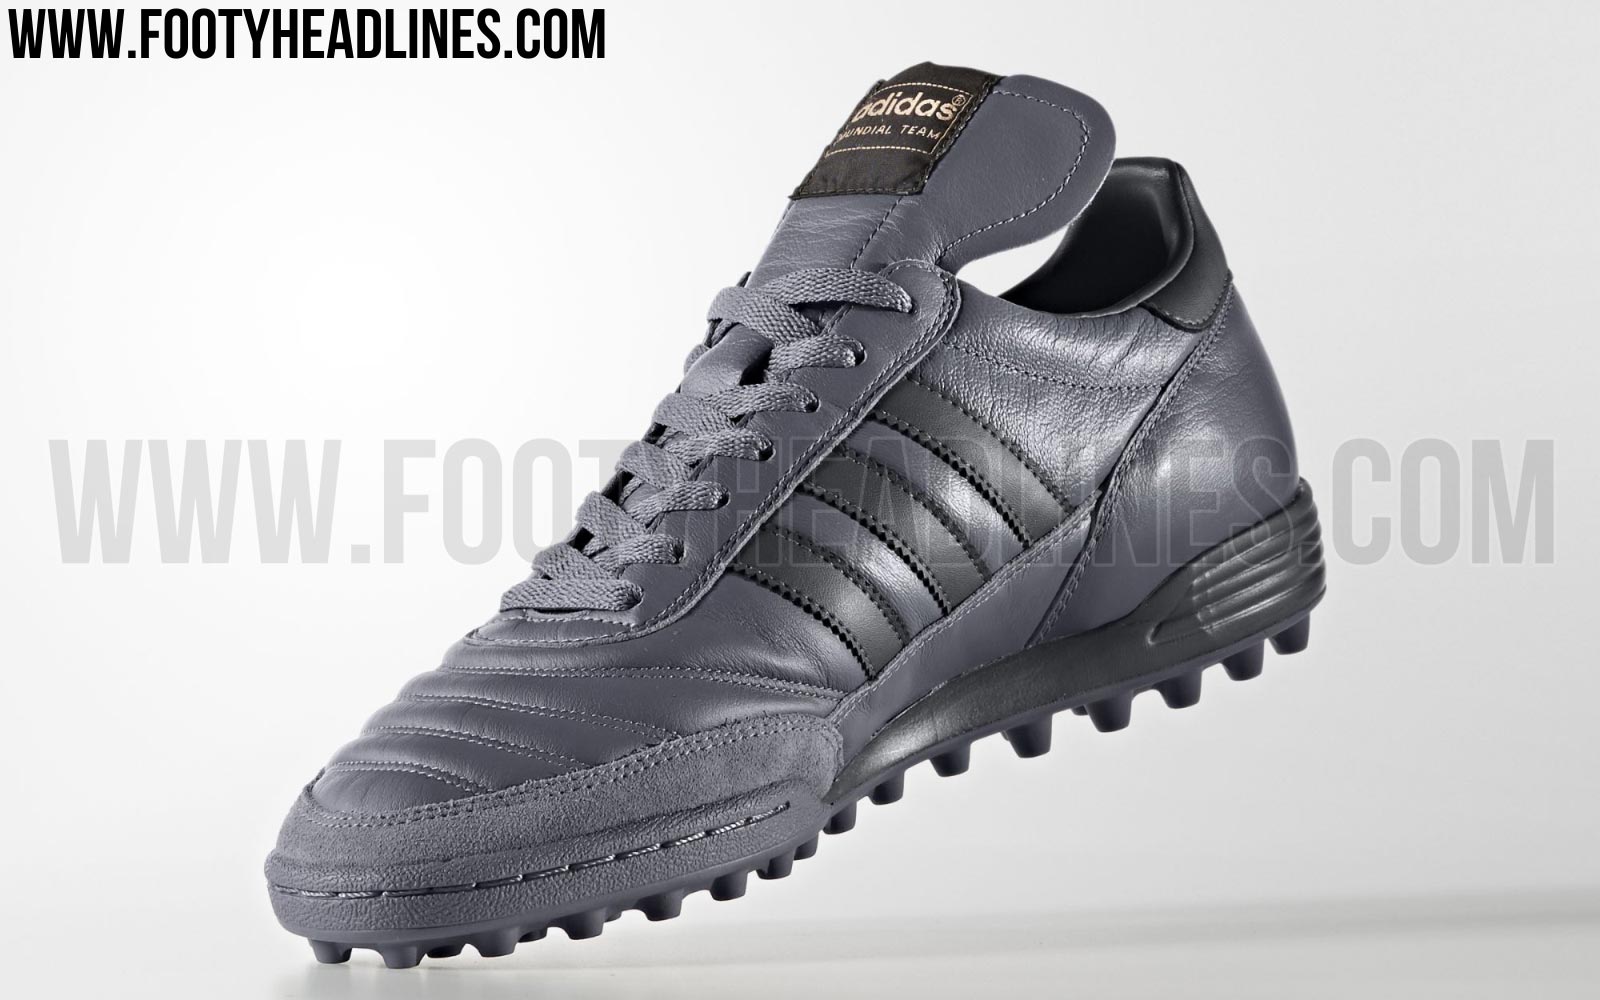 Grey Adidas Mundial Team Boots Released - Footy Headlines